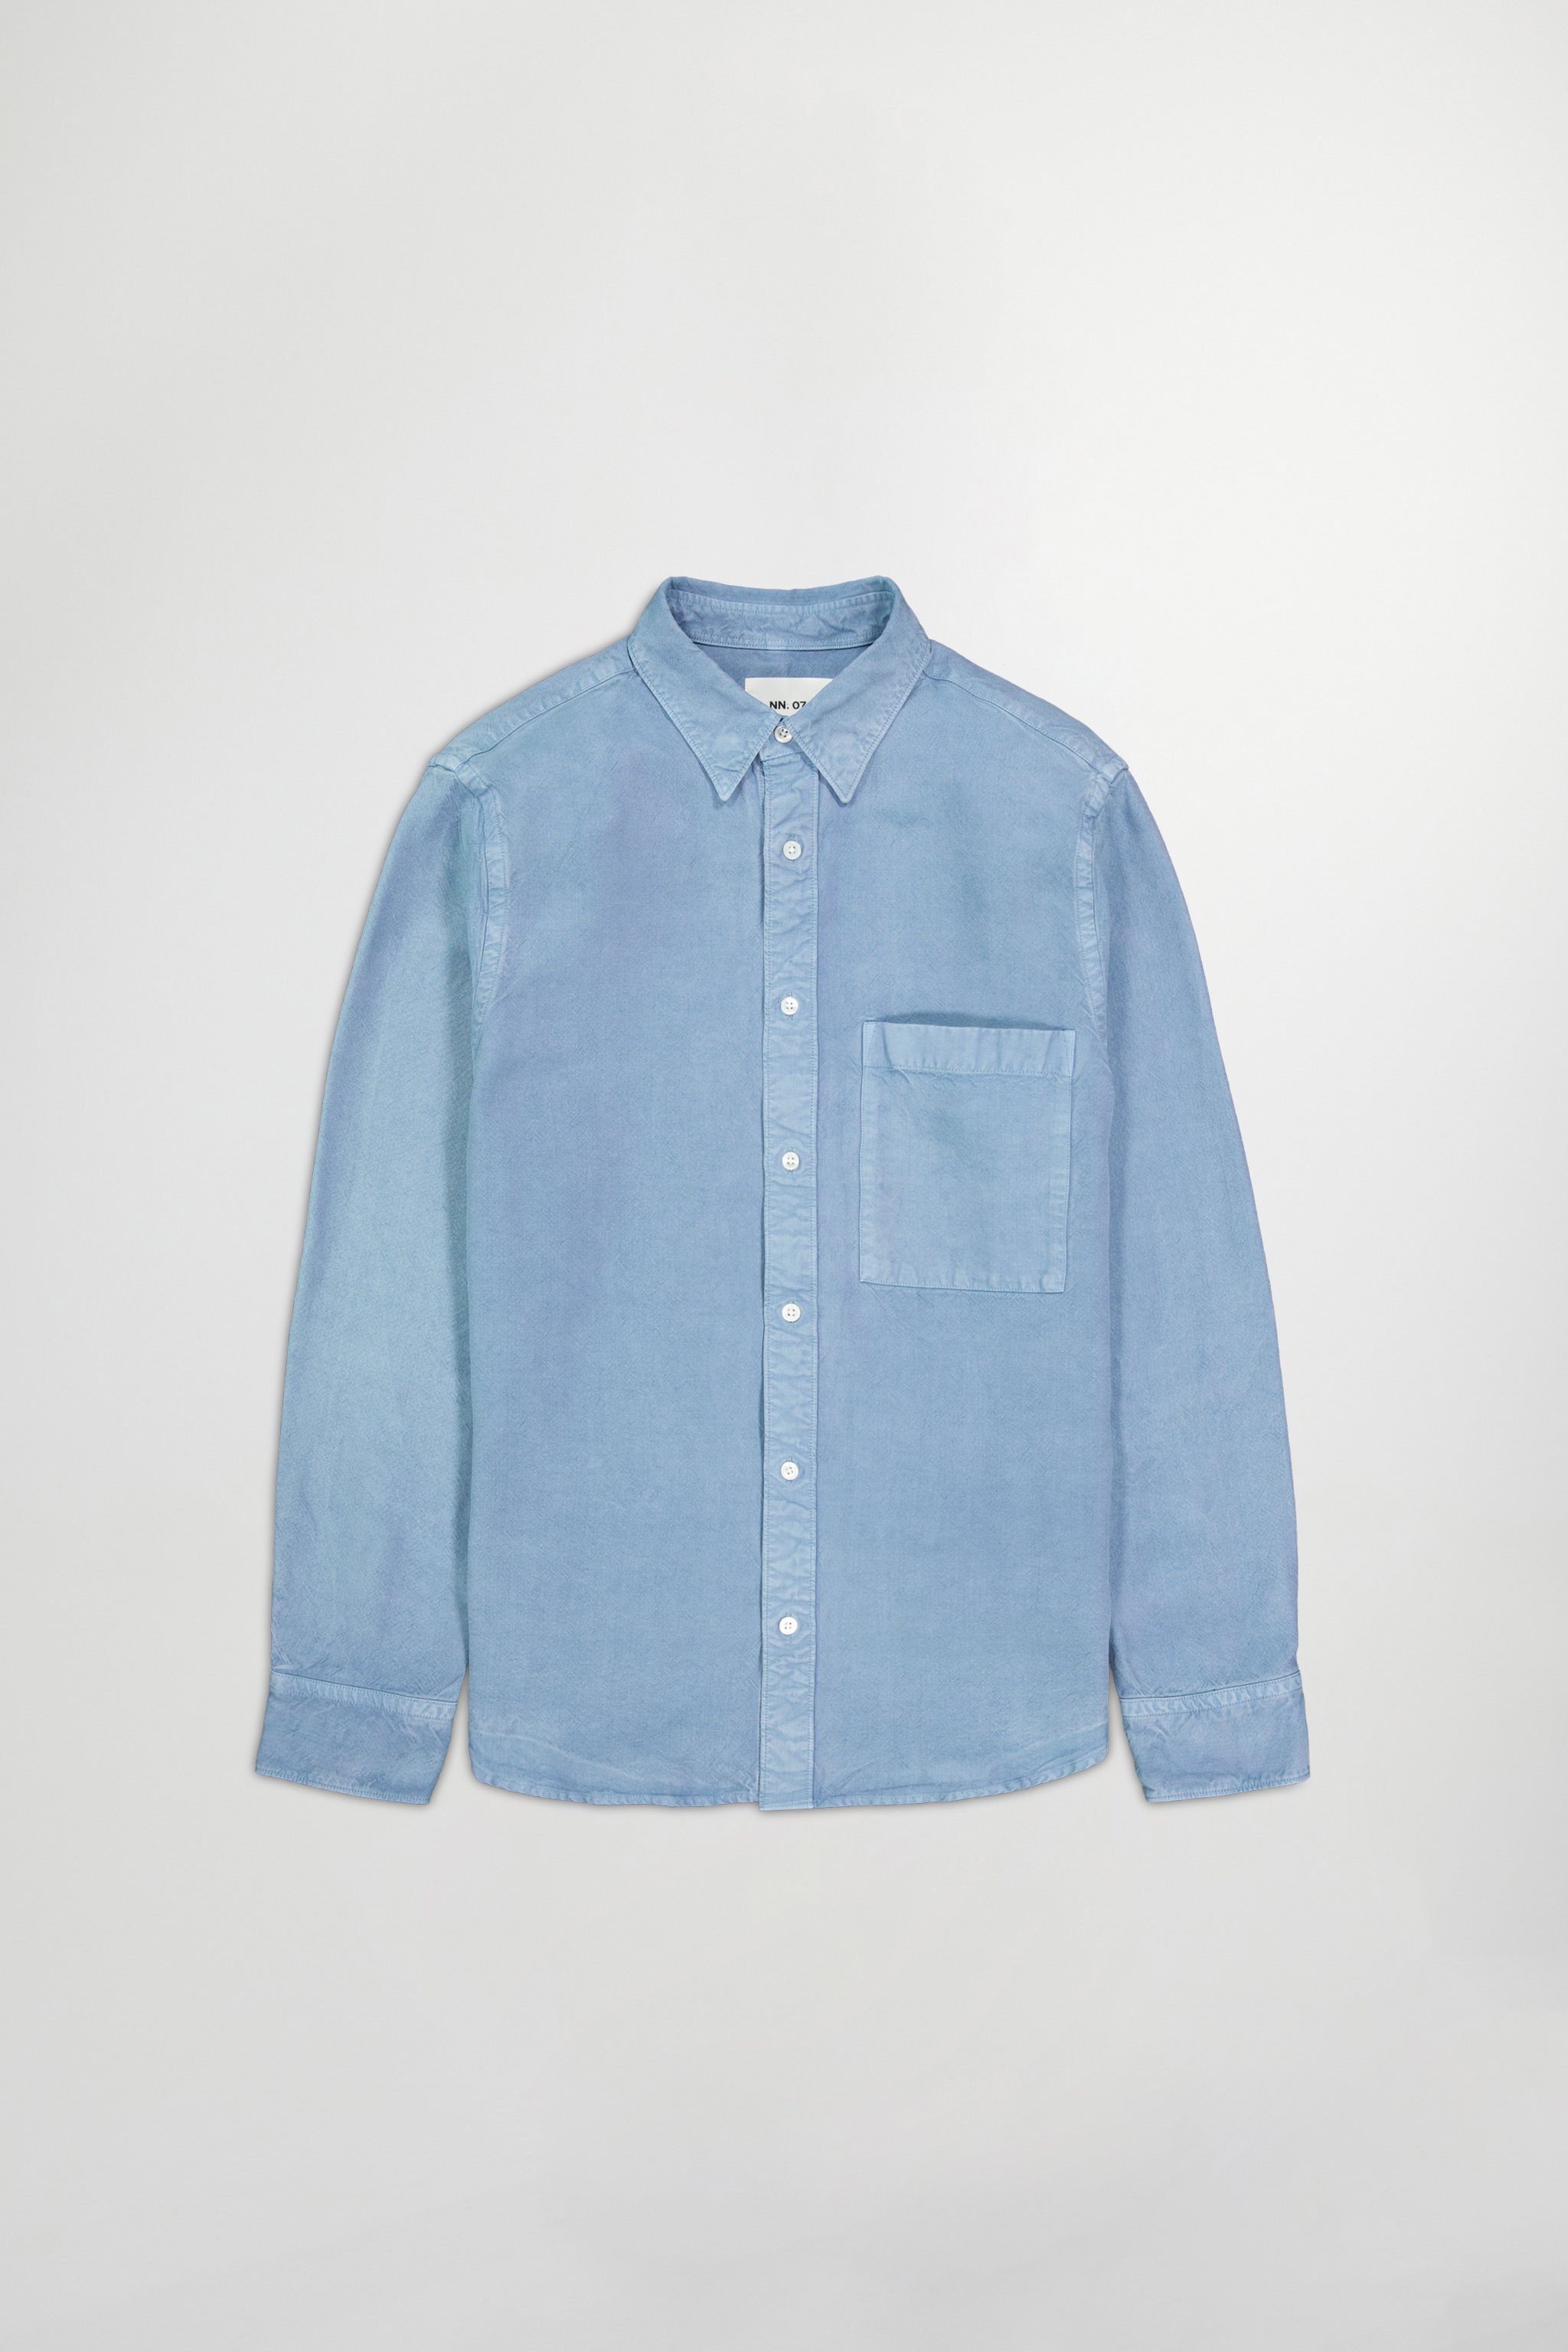 Buy Cohen 5213 - - online shirt at men\'s Blue